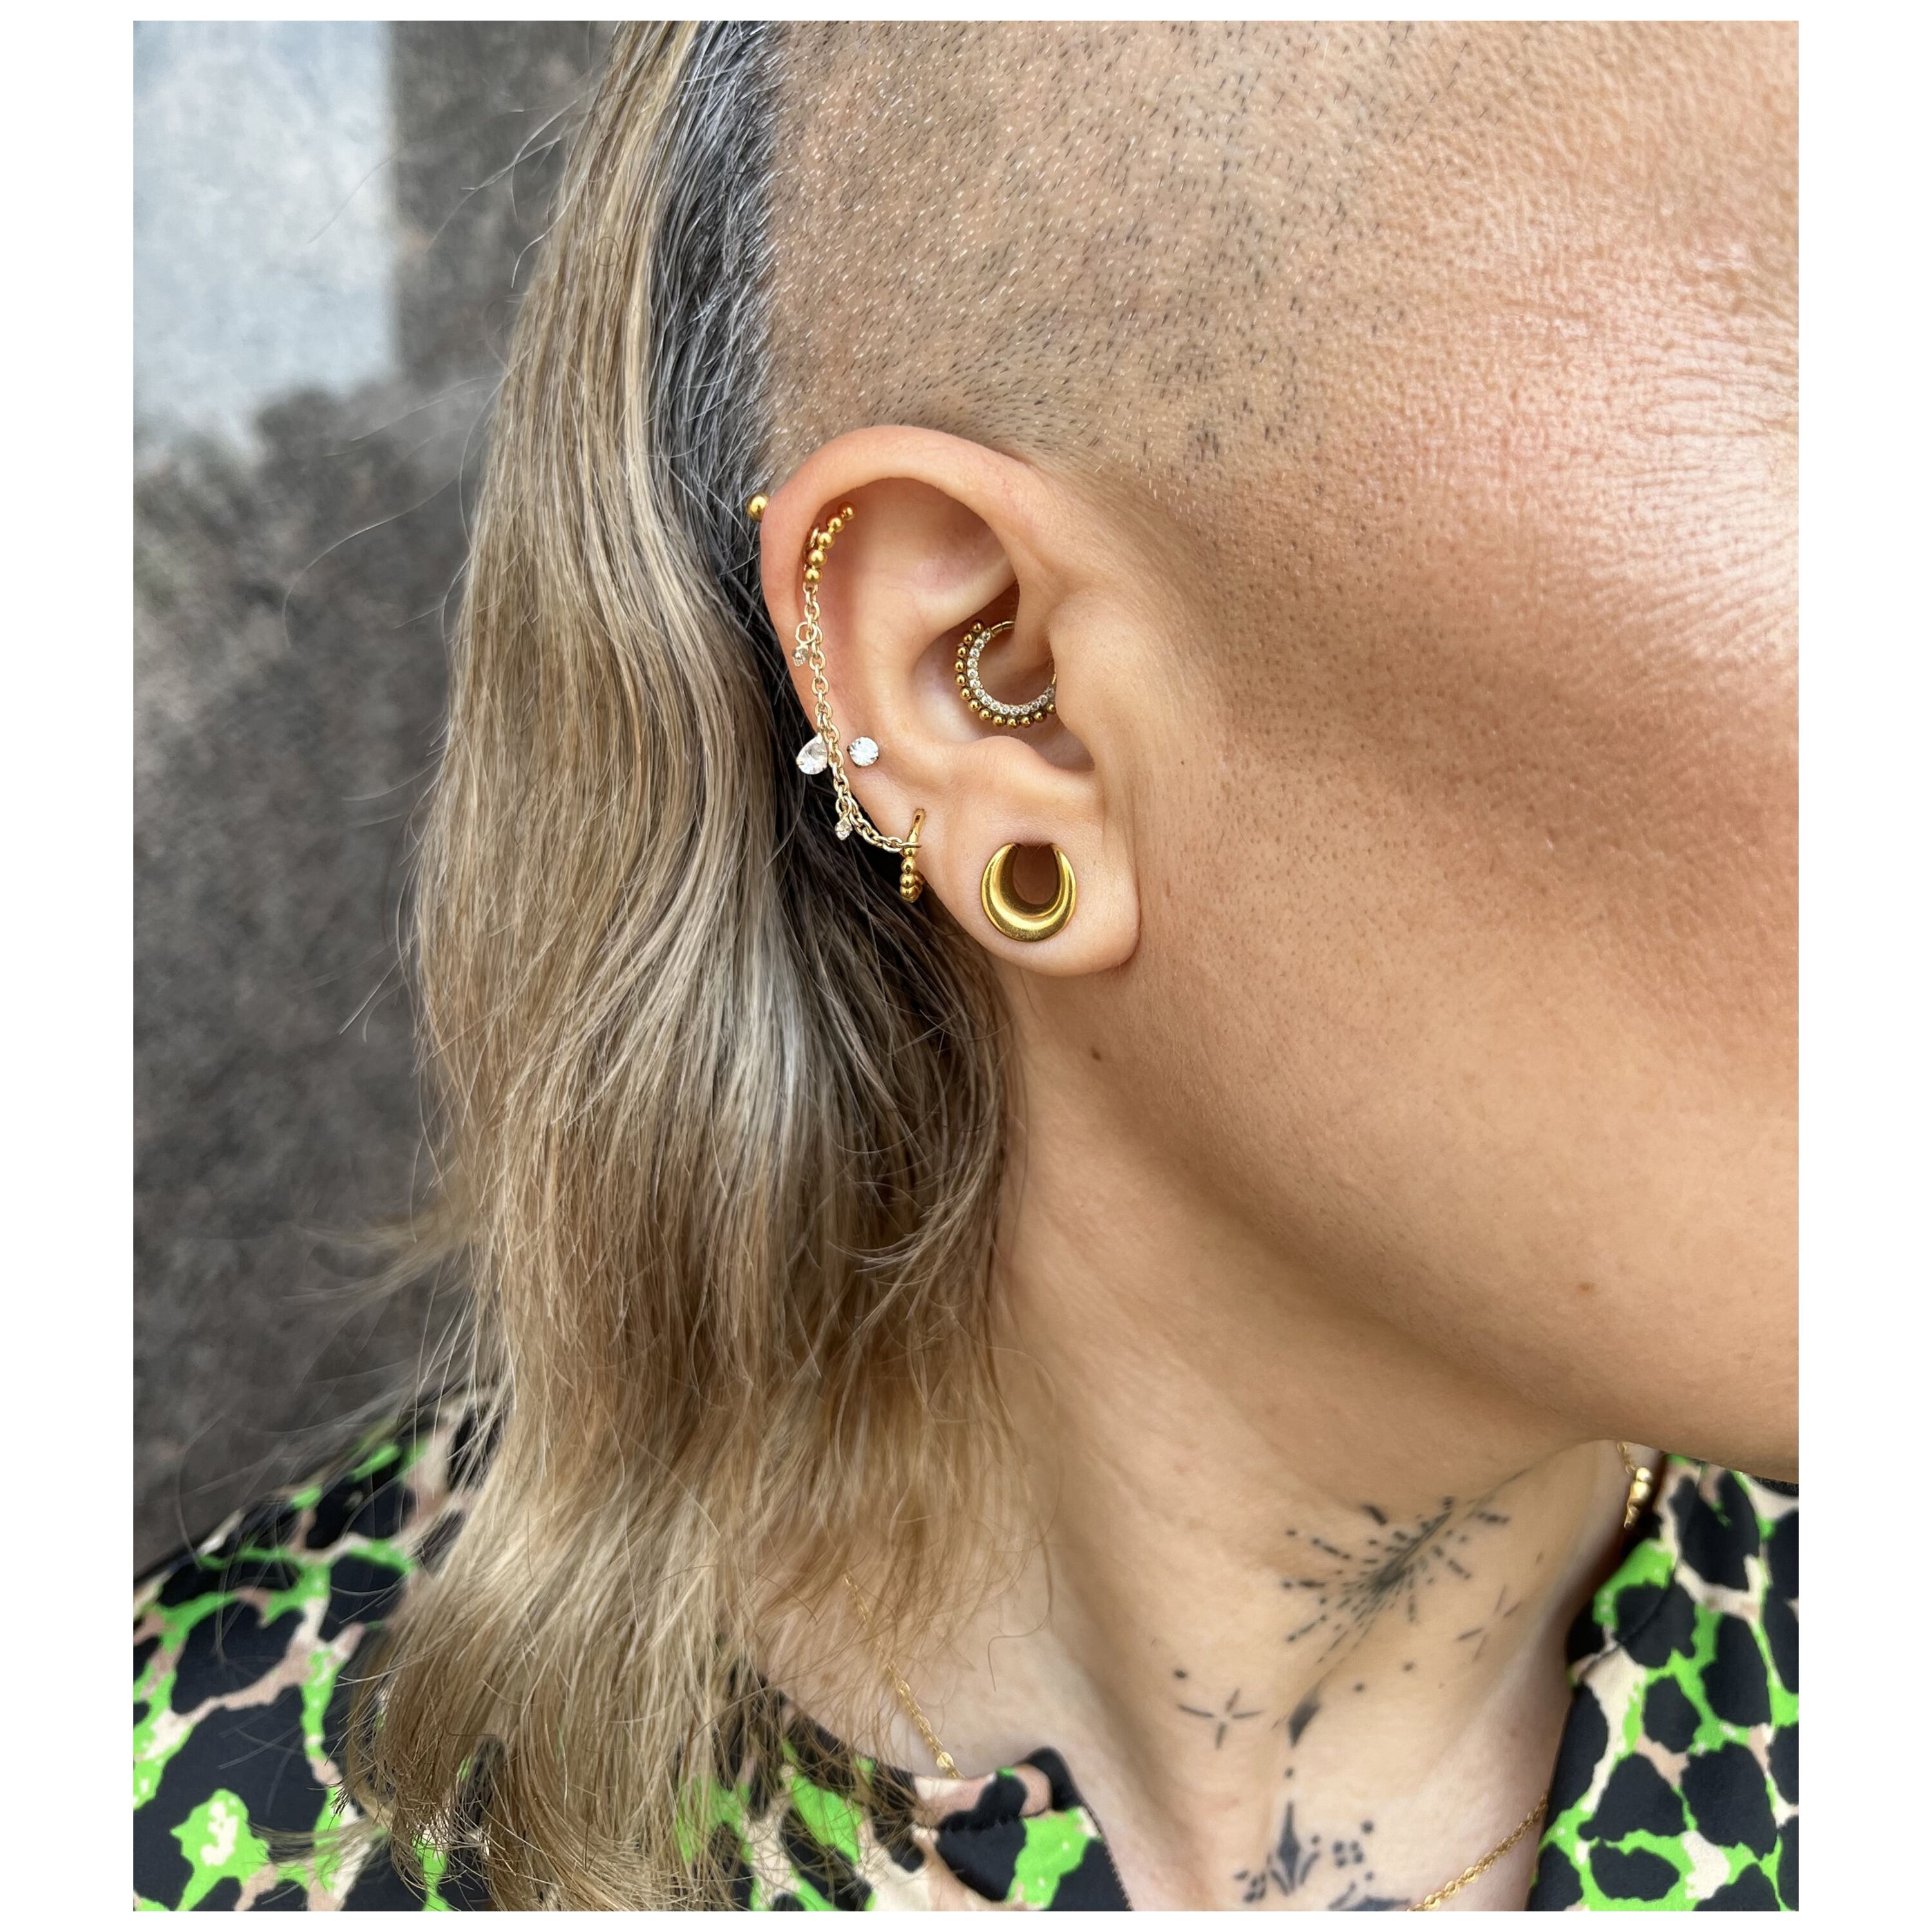 cartilage ear piercing tumblr